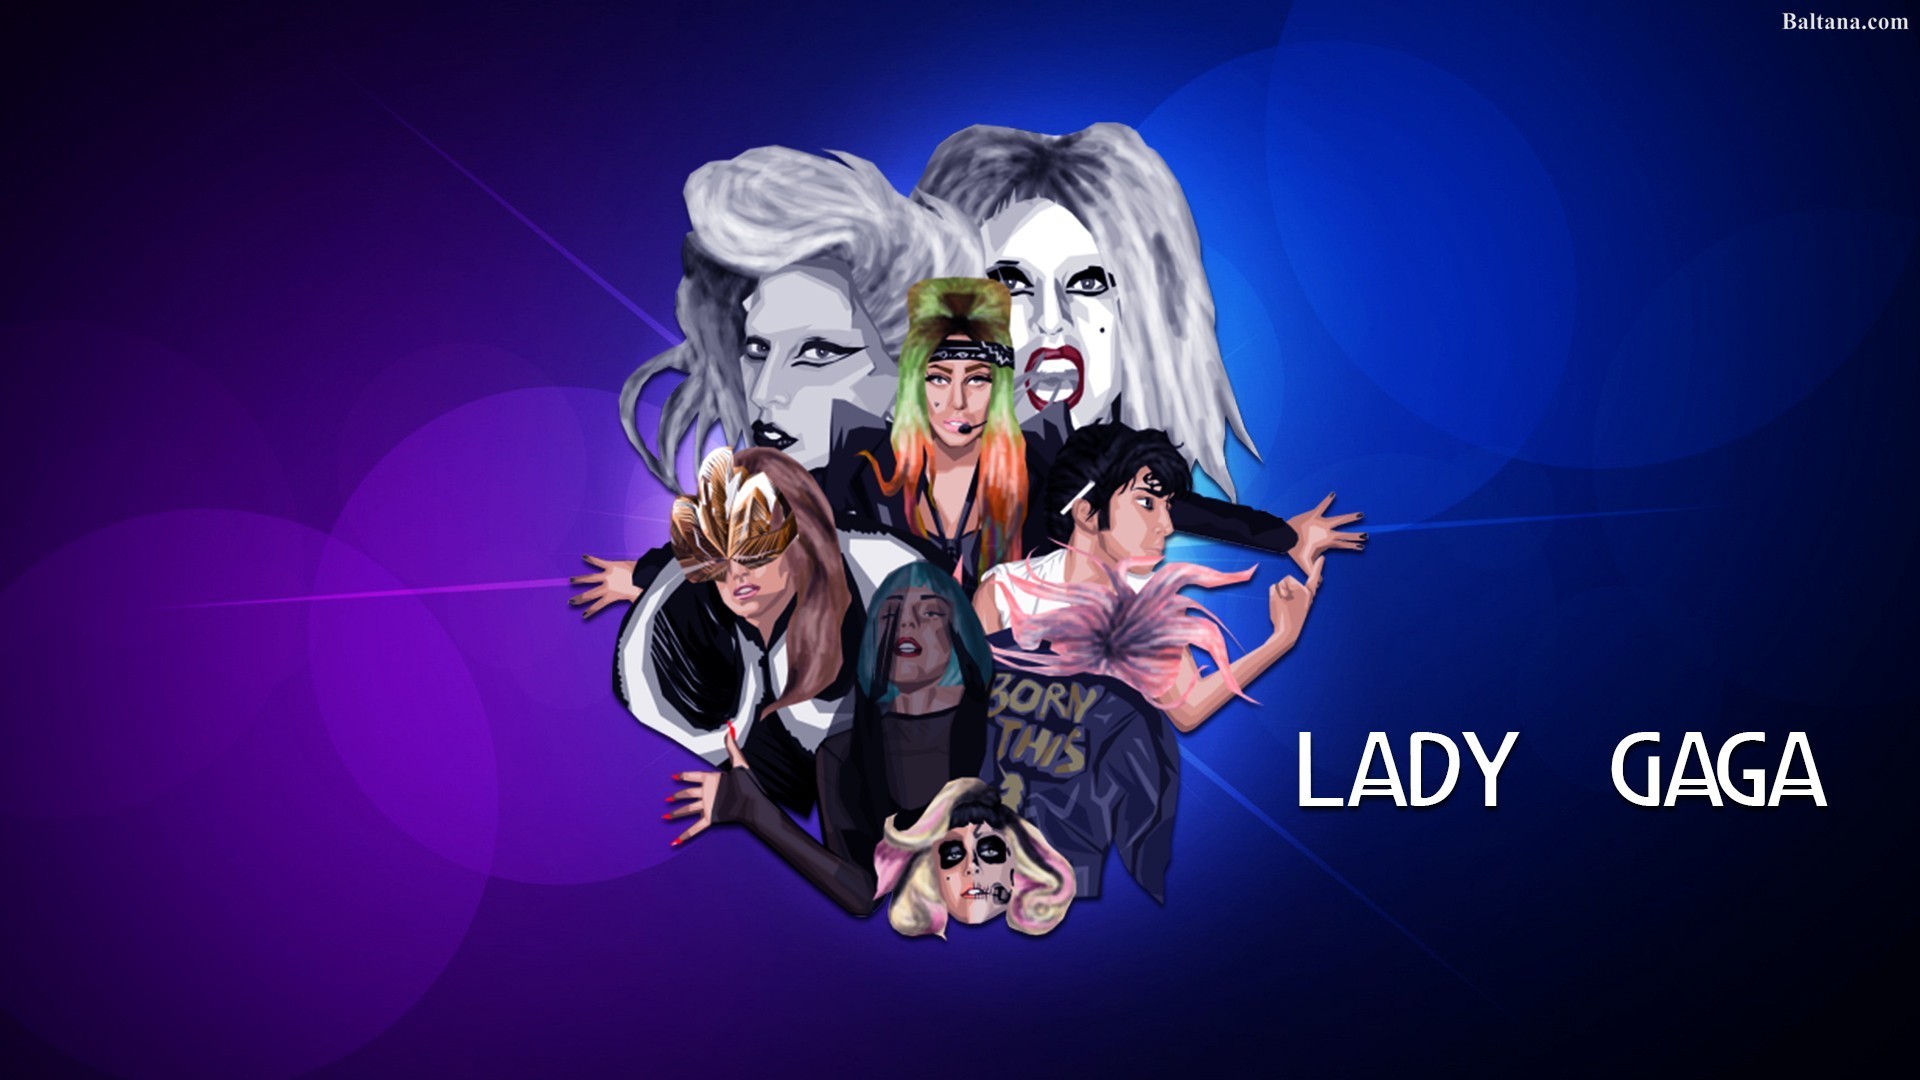 Lady Gaga HD Wallpaper | Background Image | 1920x1080 | ID 